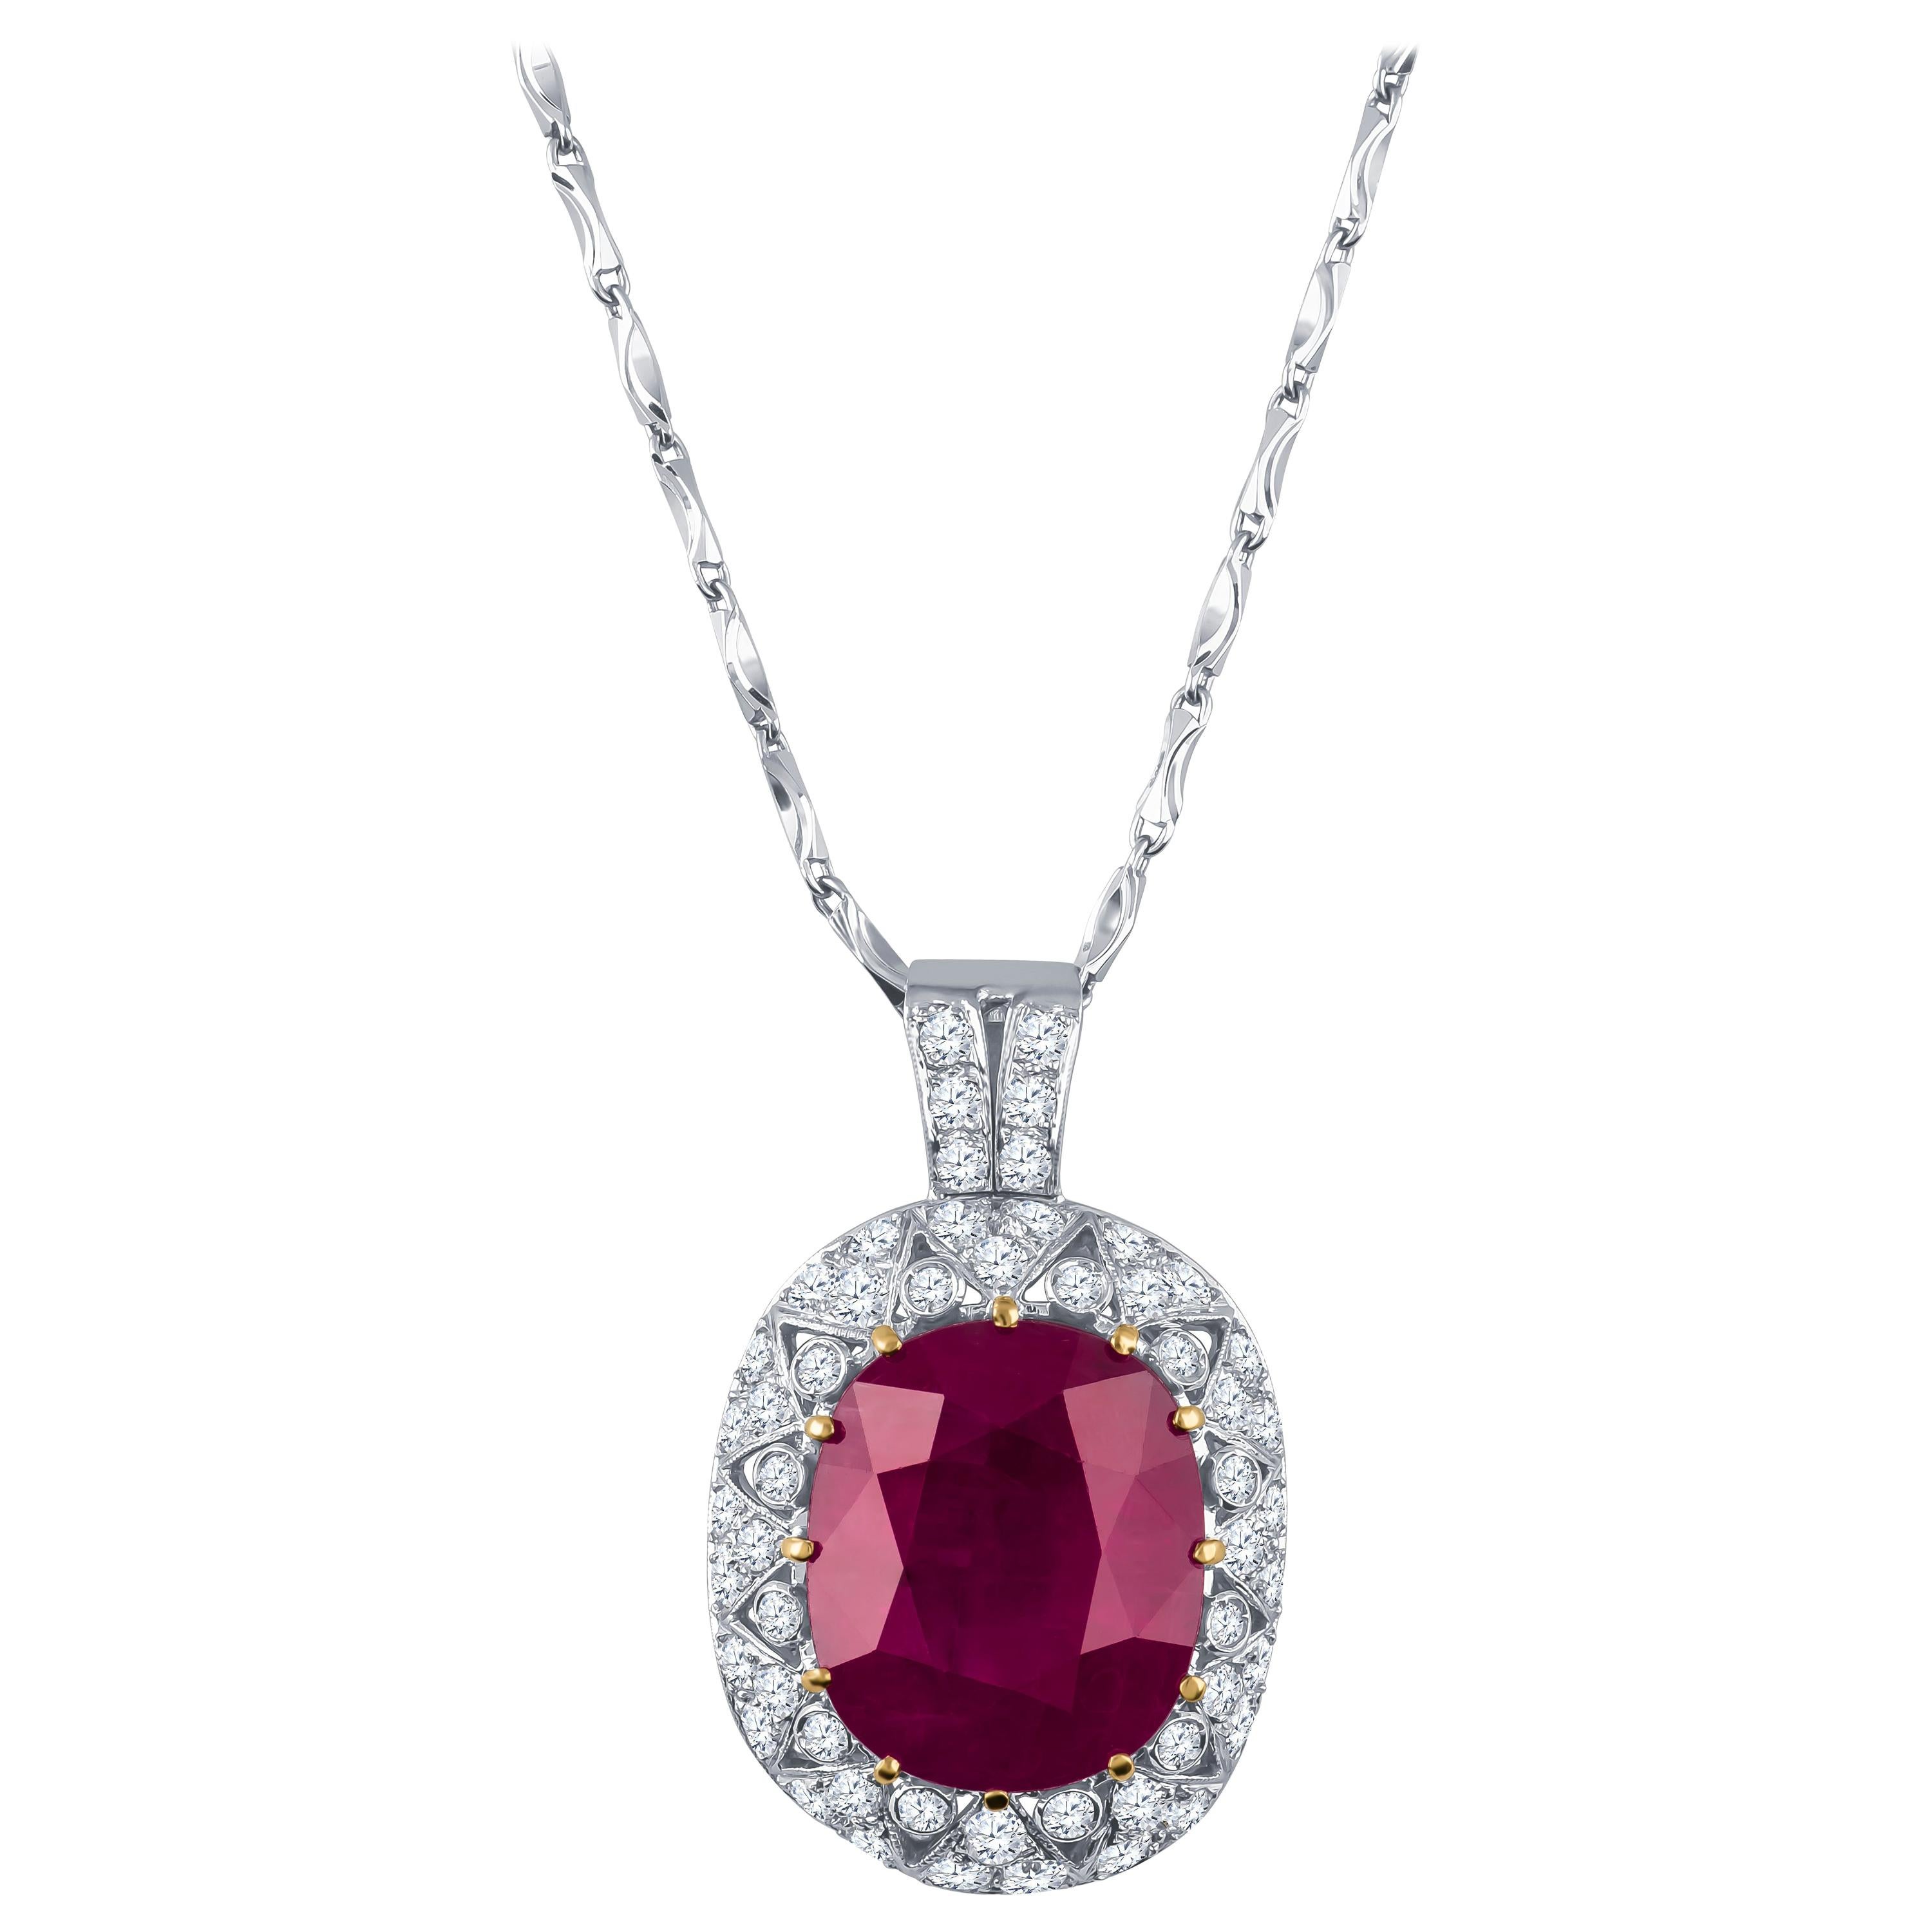 25.16 Carat Burmese Ruby Set on Platinum Necklace, AGL Gemstone Report